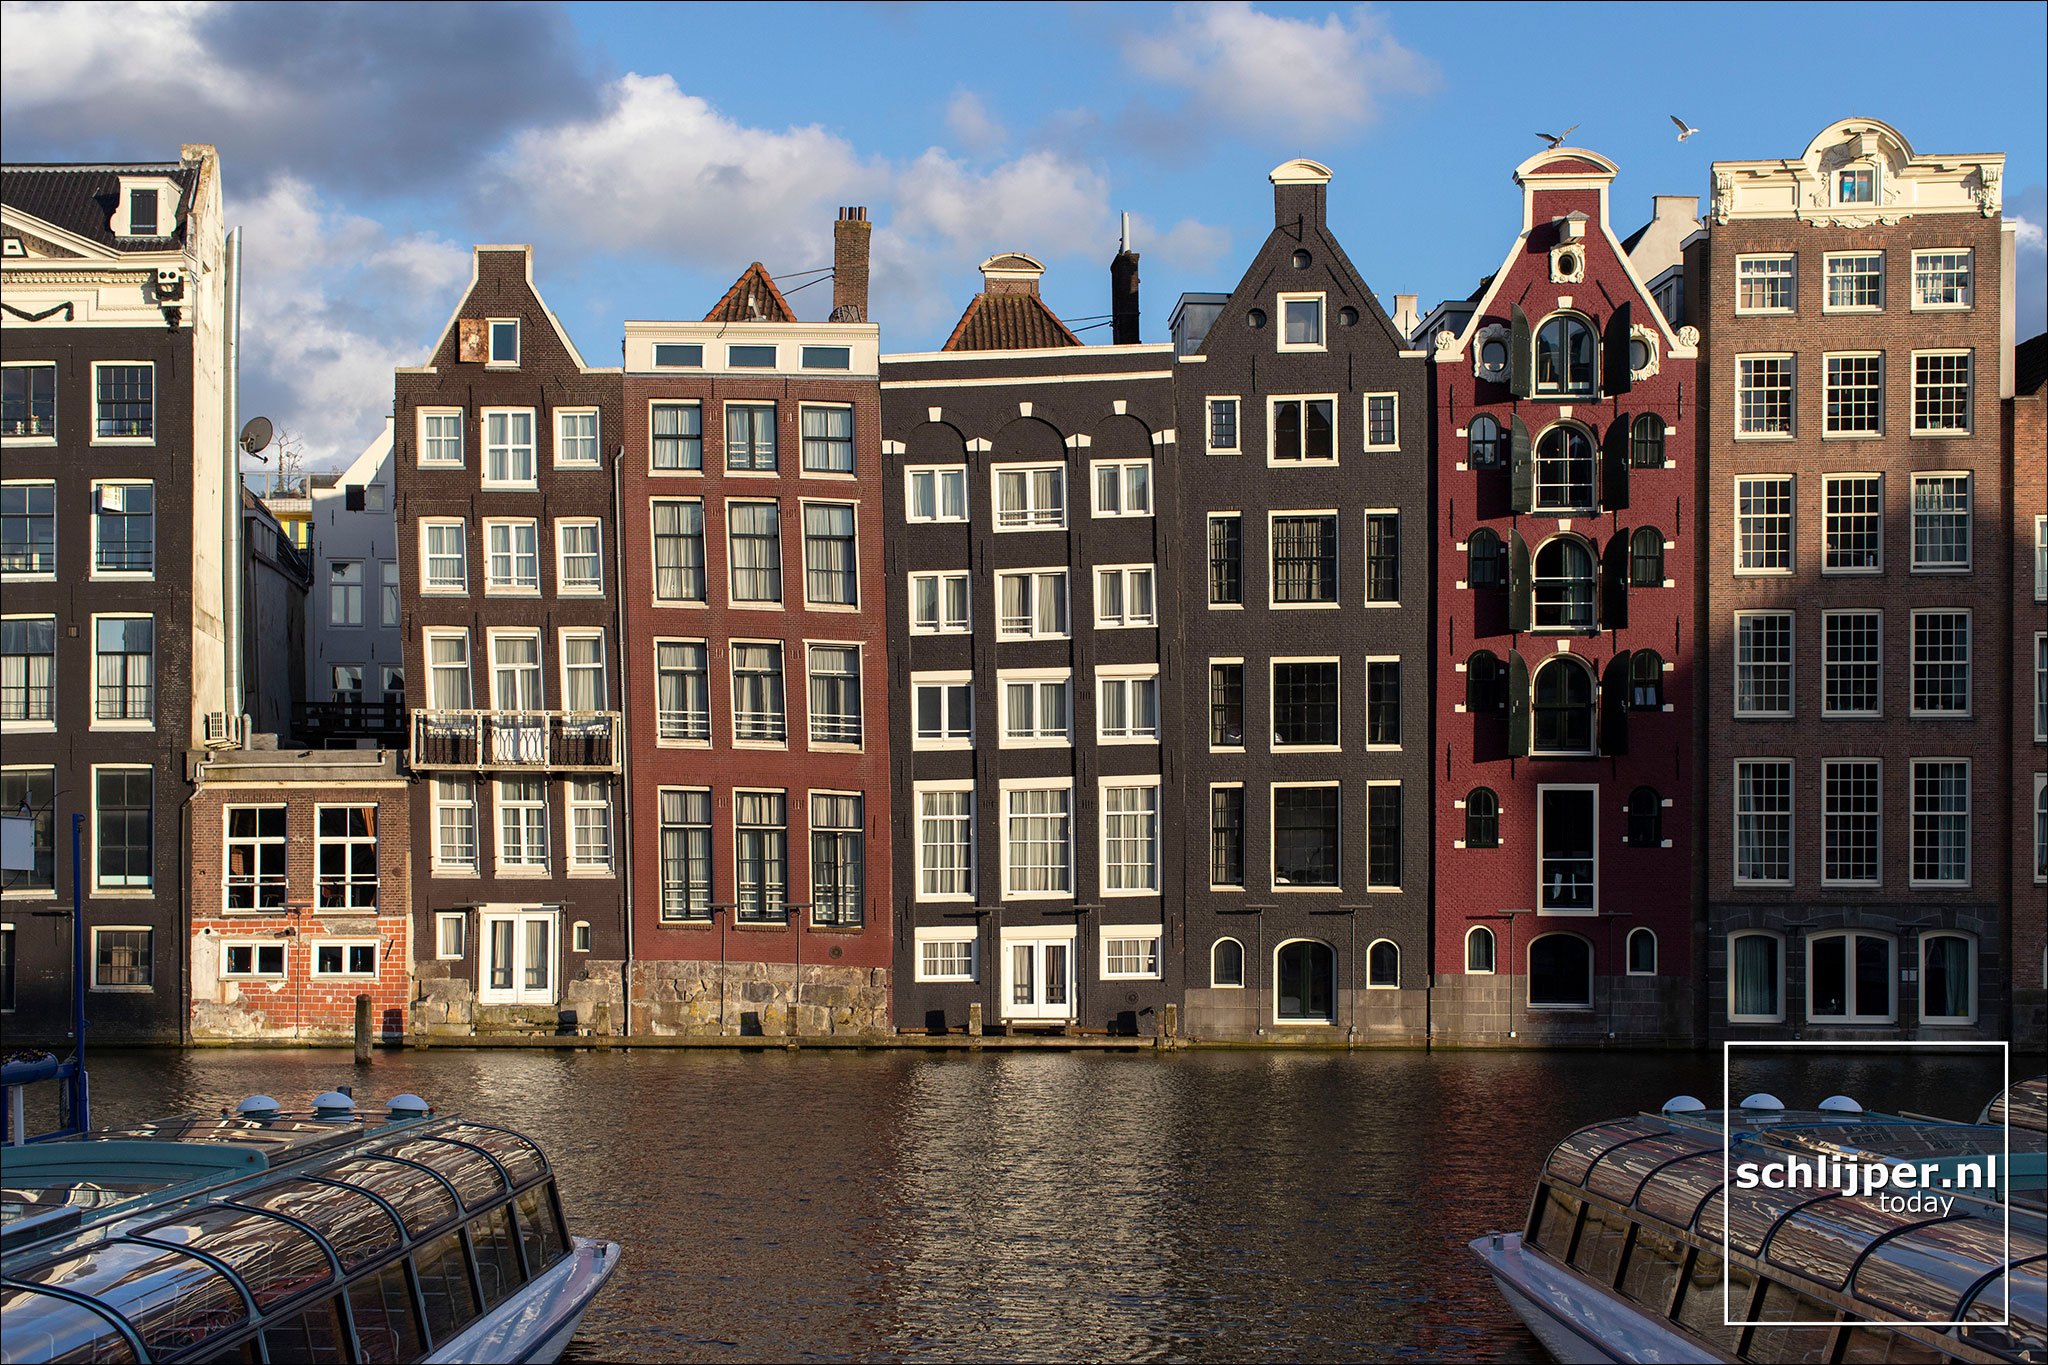 Nederland, Amsterdam, 3 april 2020